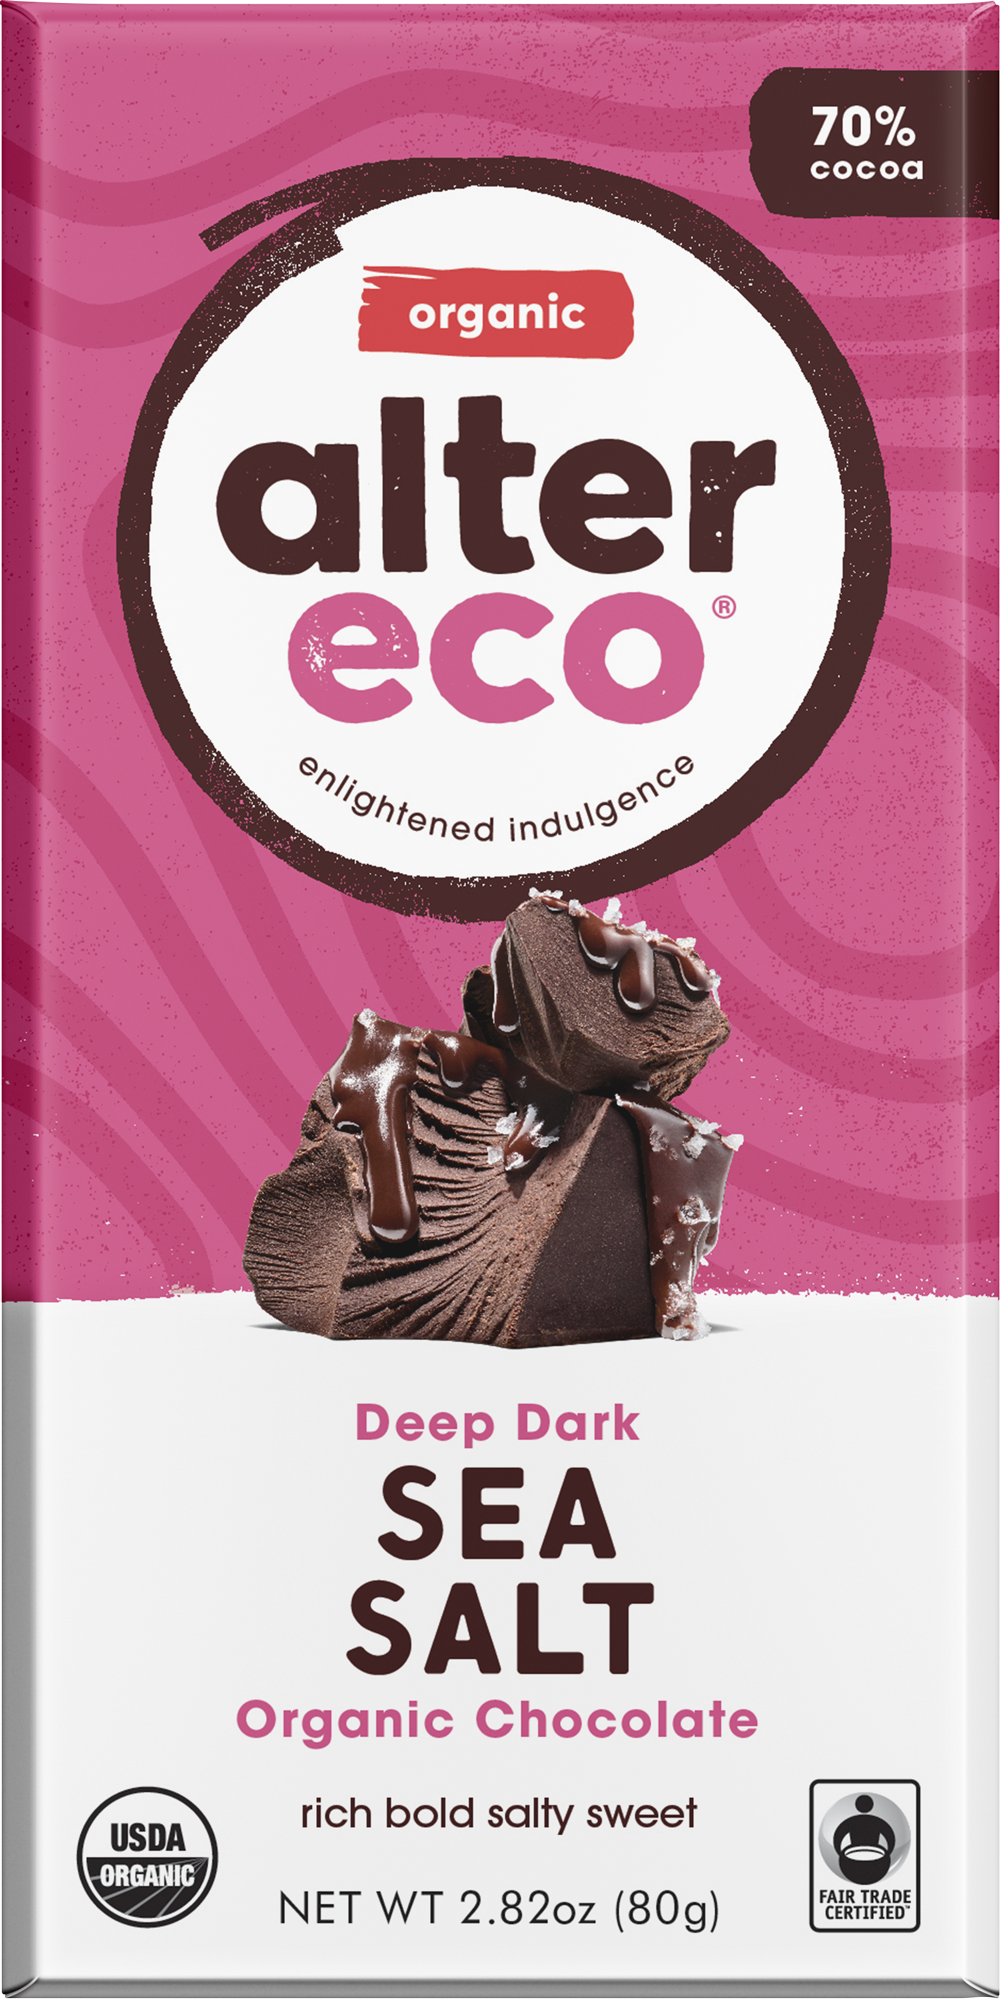 Alter Eco chocolate bar